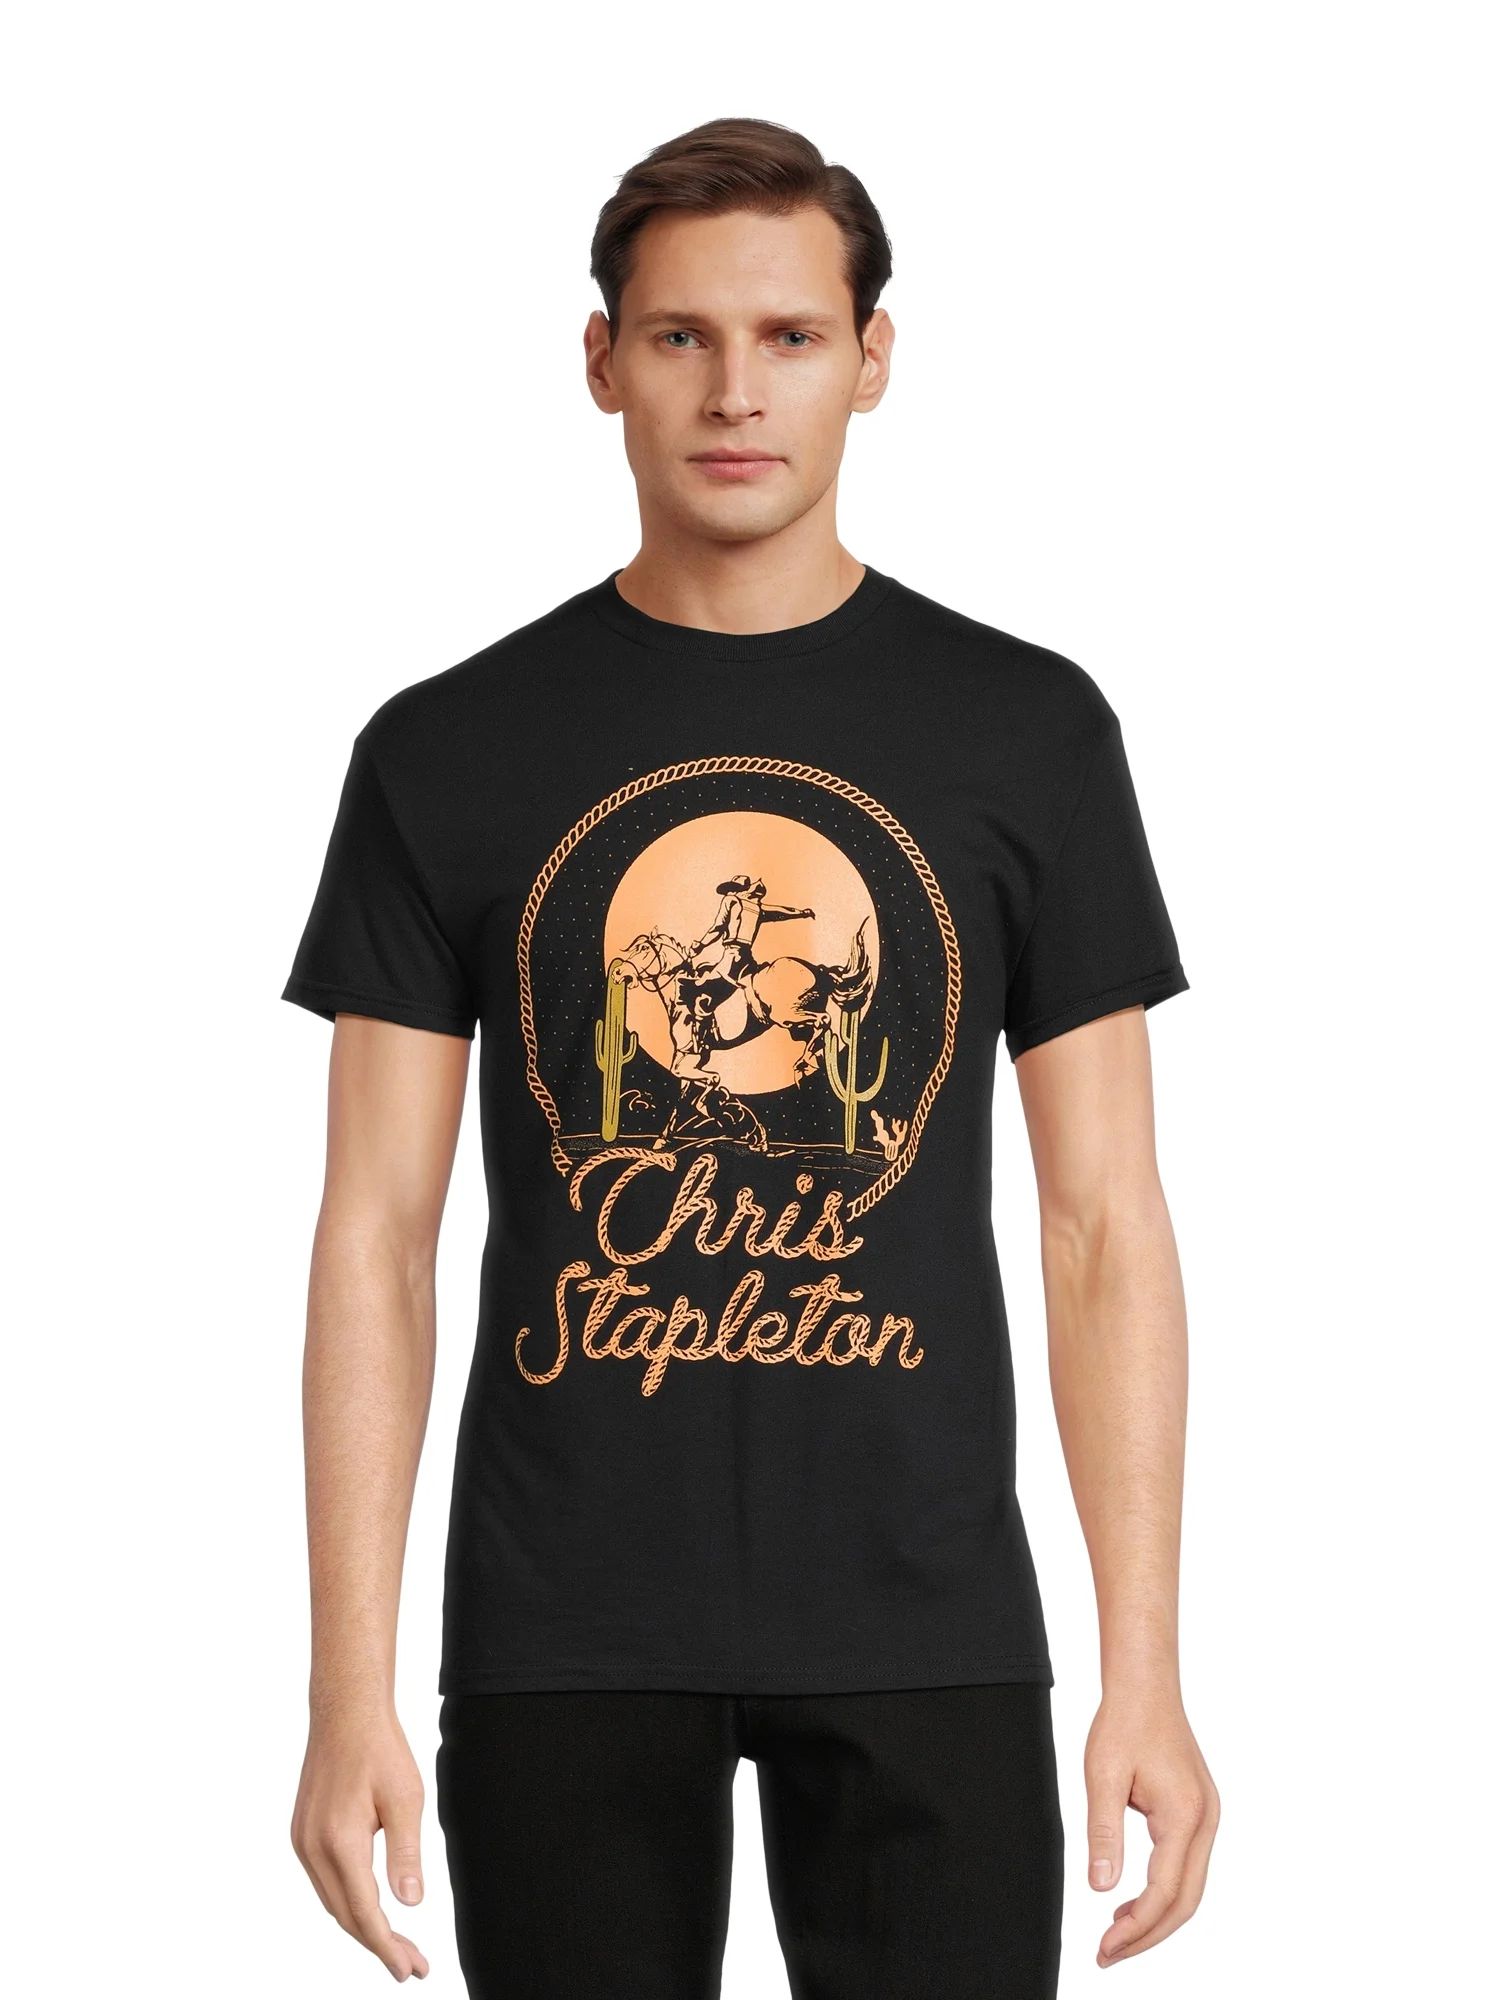 Chris Stapleton Men's & Big Men's Graphic Tee Shirts, Sizes S-3XL | Walmart (US)